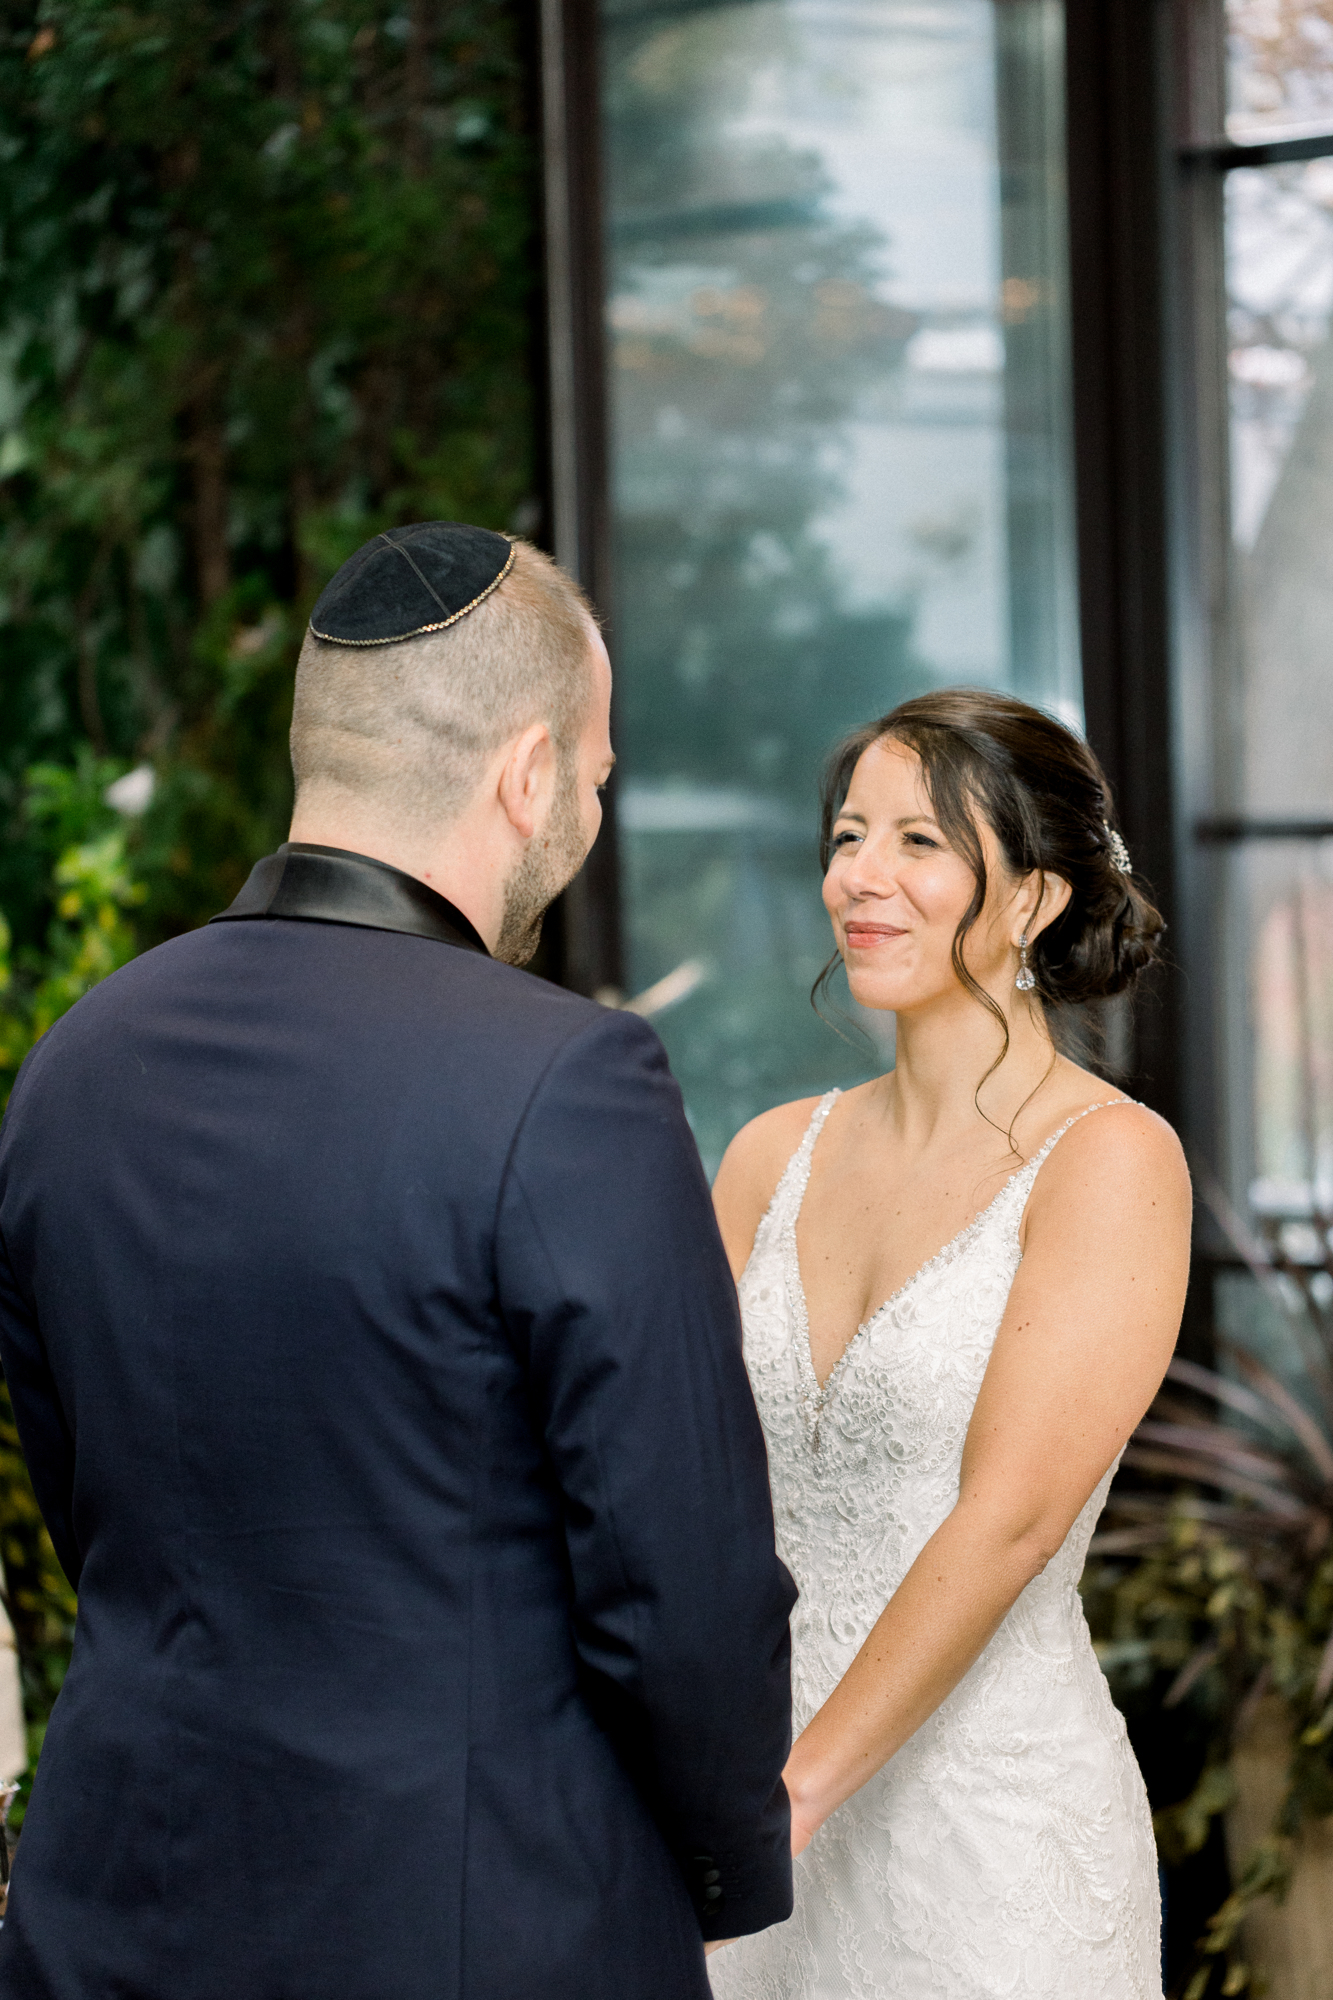 Jewish wedding ceremony at MyMoon in Williamsburg